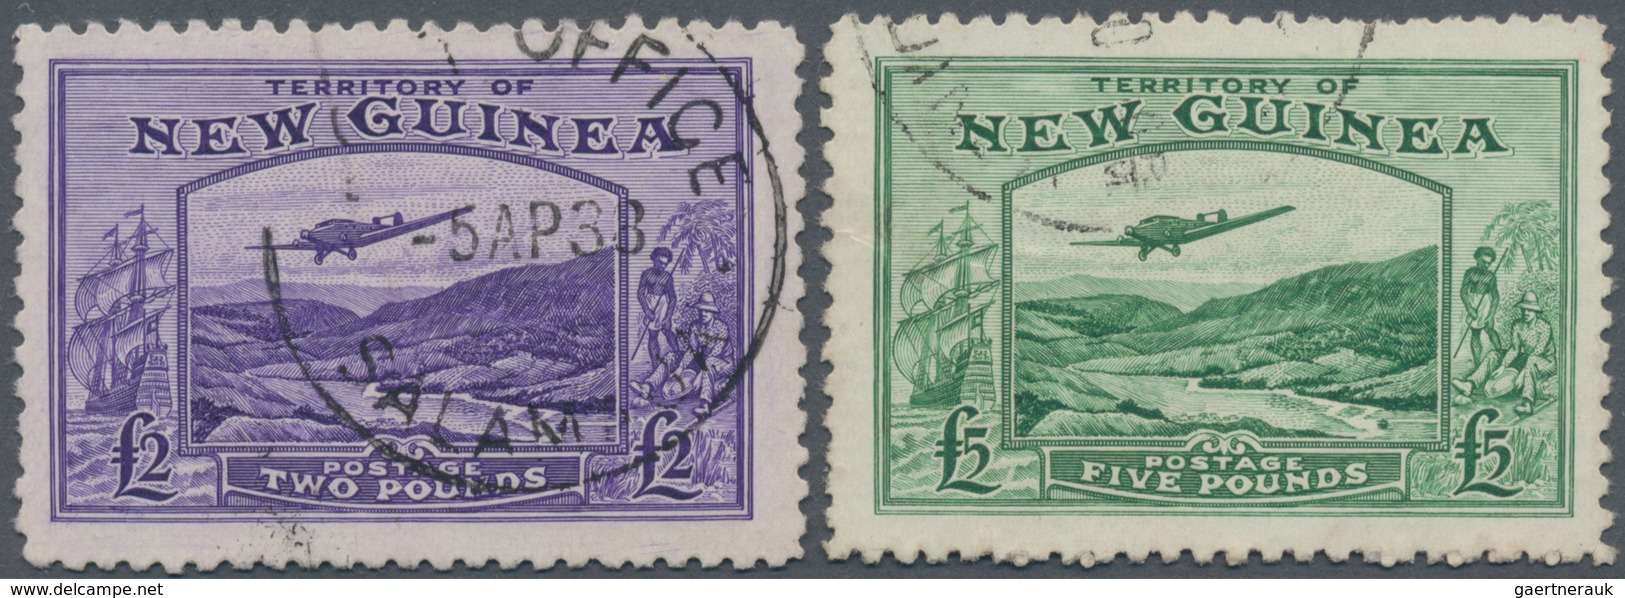 Neuguinea: 1935, Bulolo Goldfields £2 Bright Violet And £5 Emerald-green Fine Both Fine Used, Typica - Papoea-Nieuw-Guinea